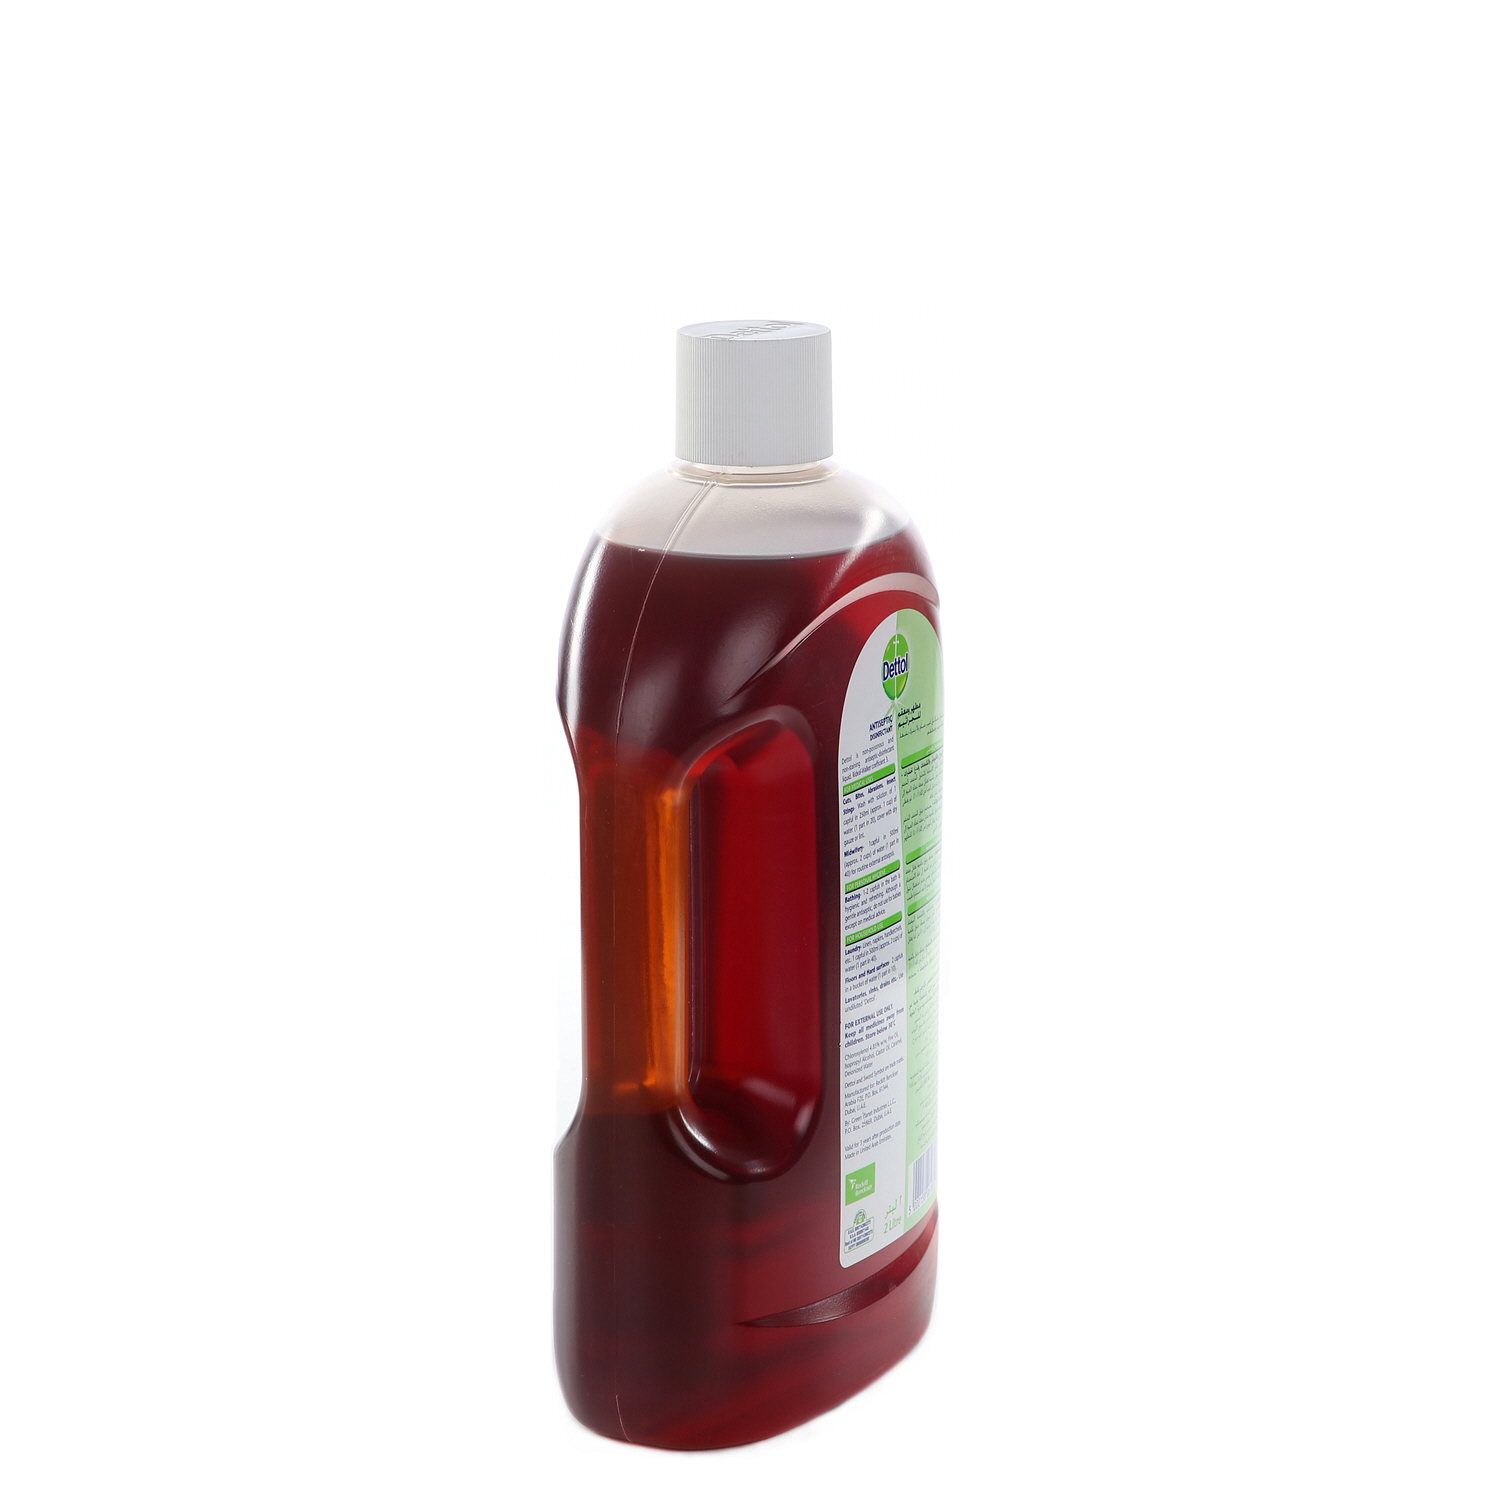 Dettol Anti-Bacterial Disinfectant Liquid 2 L